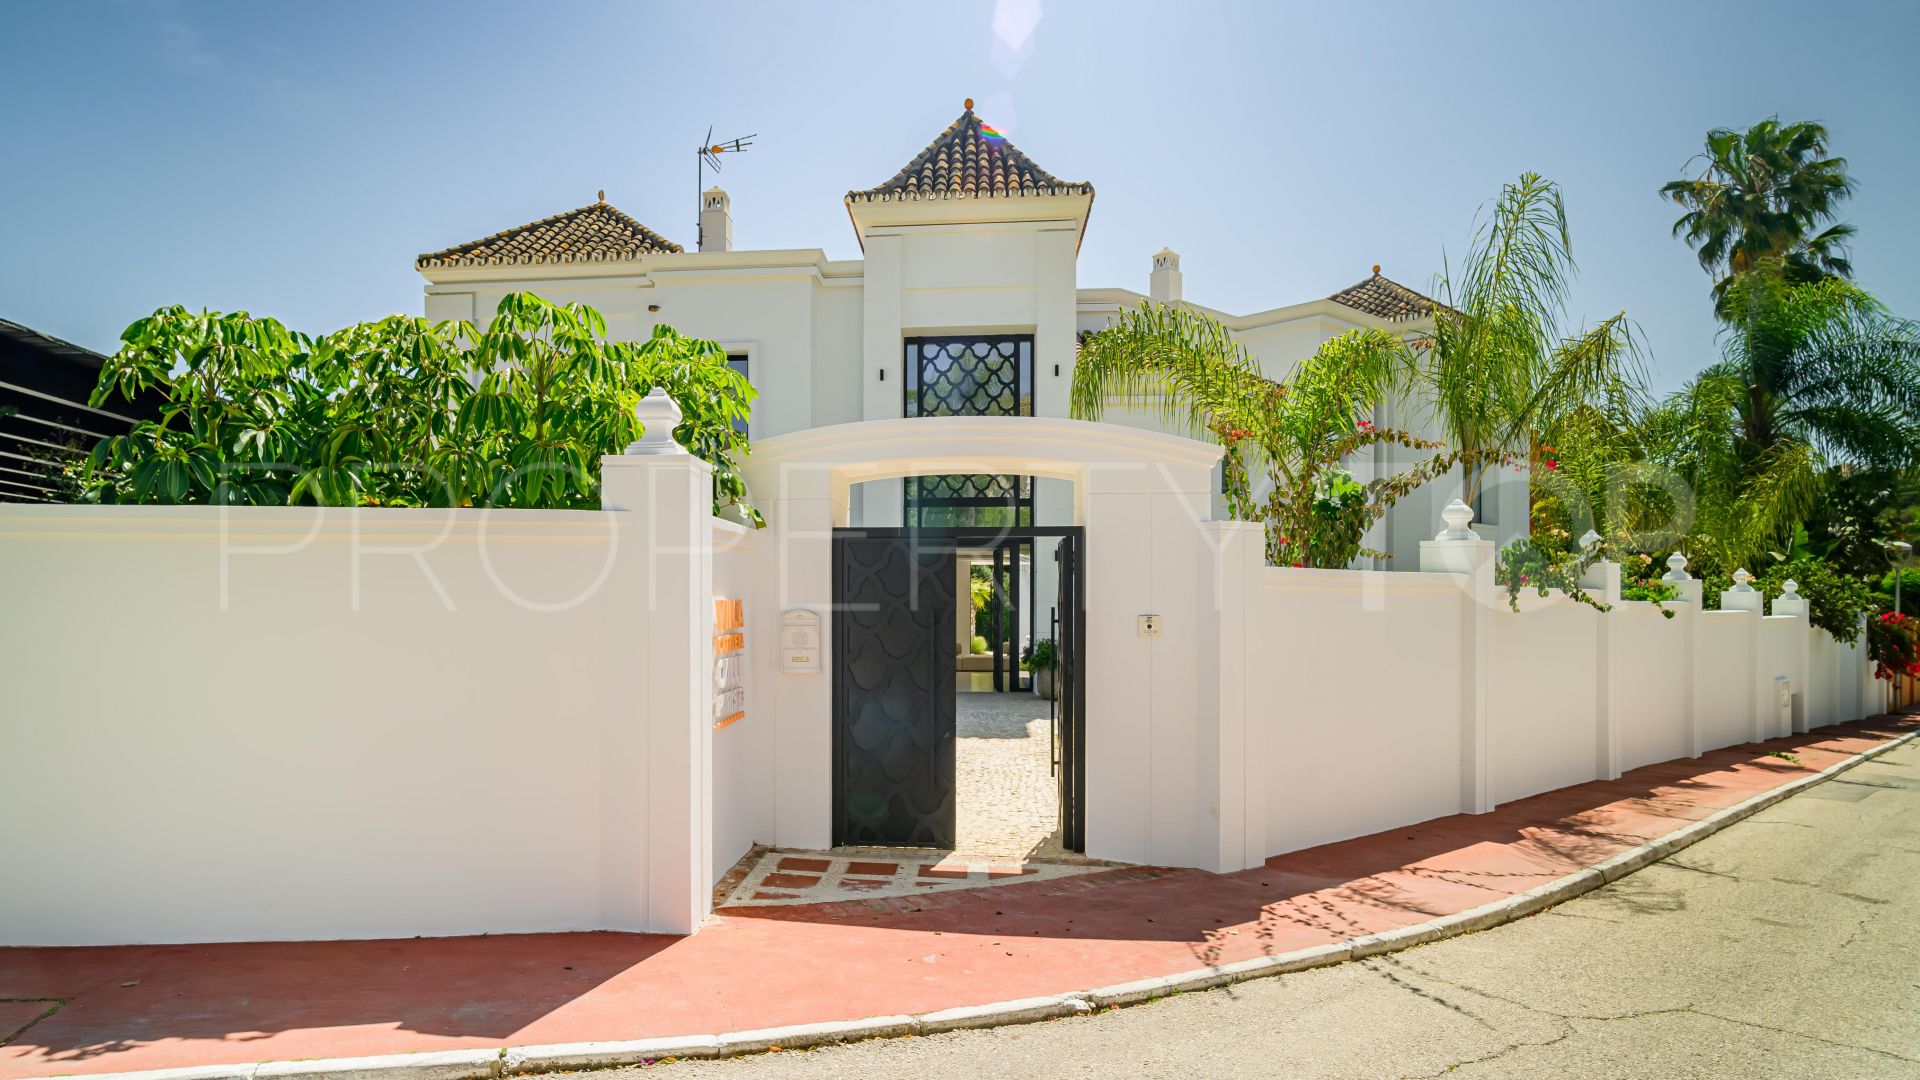 Villa for sale in Parcelas del Golf with 5 bedrooms